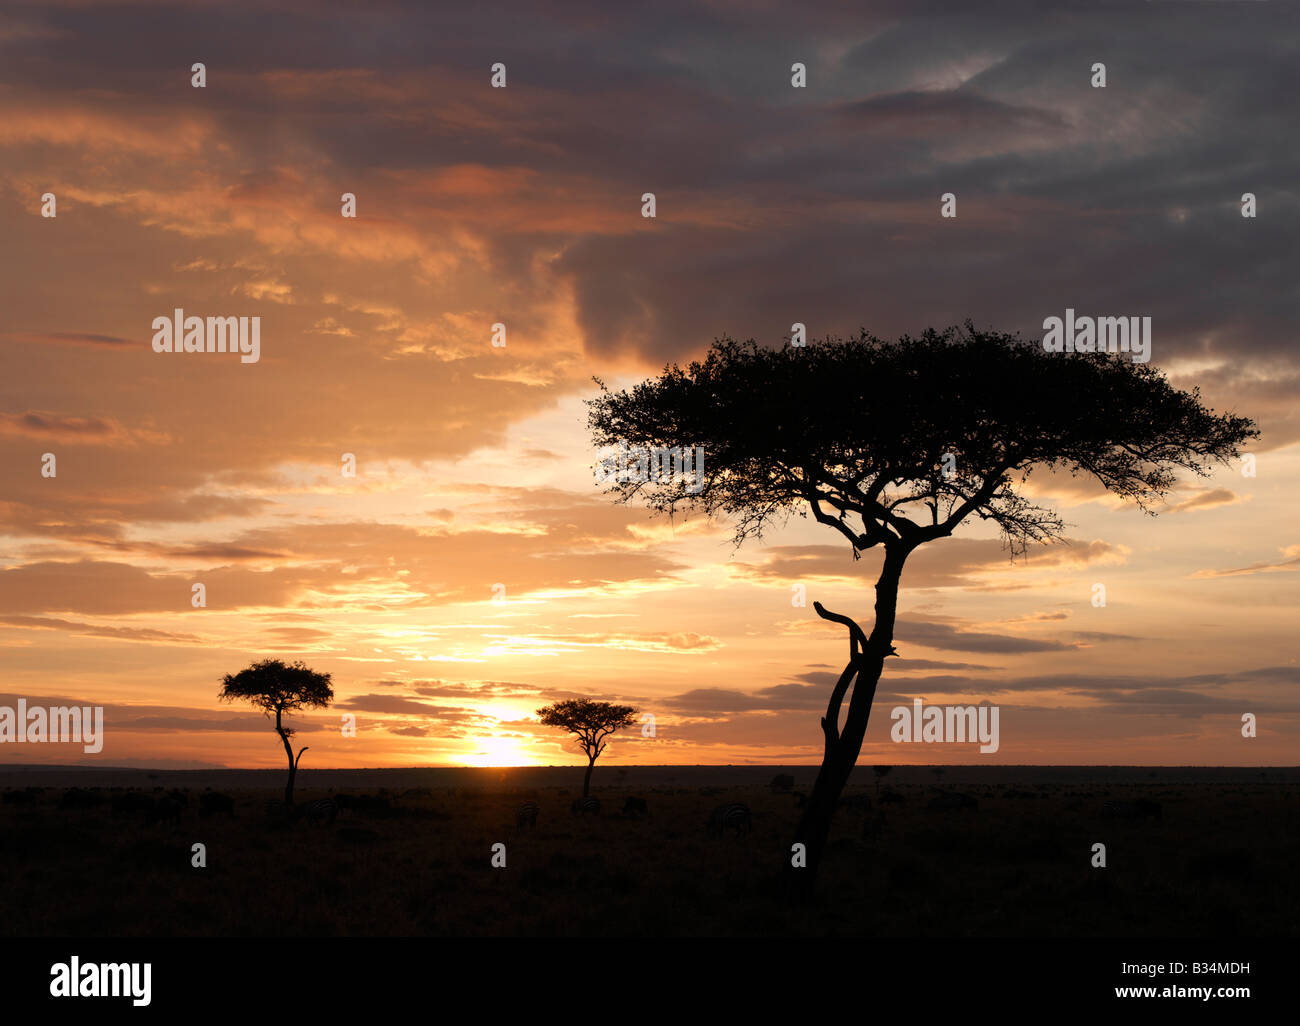 Kenya, Narok District, Masai Mara. Balanites trees silhouetted against a setting sun in Masai Mara Game Reserve. Stock Photo